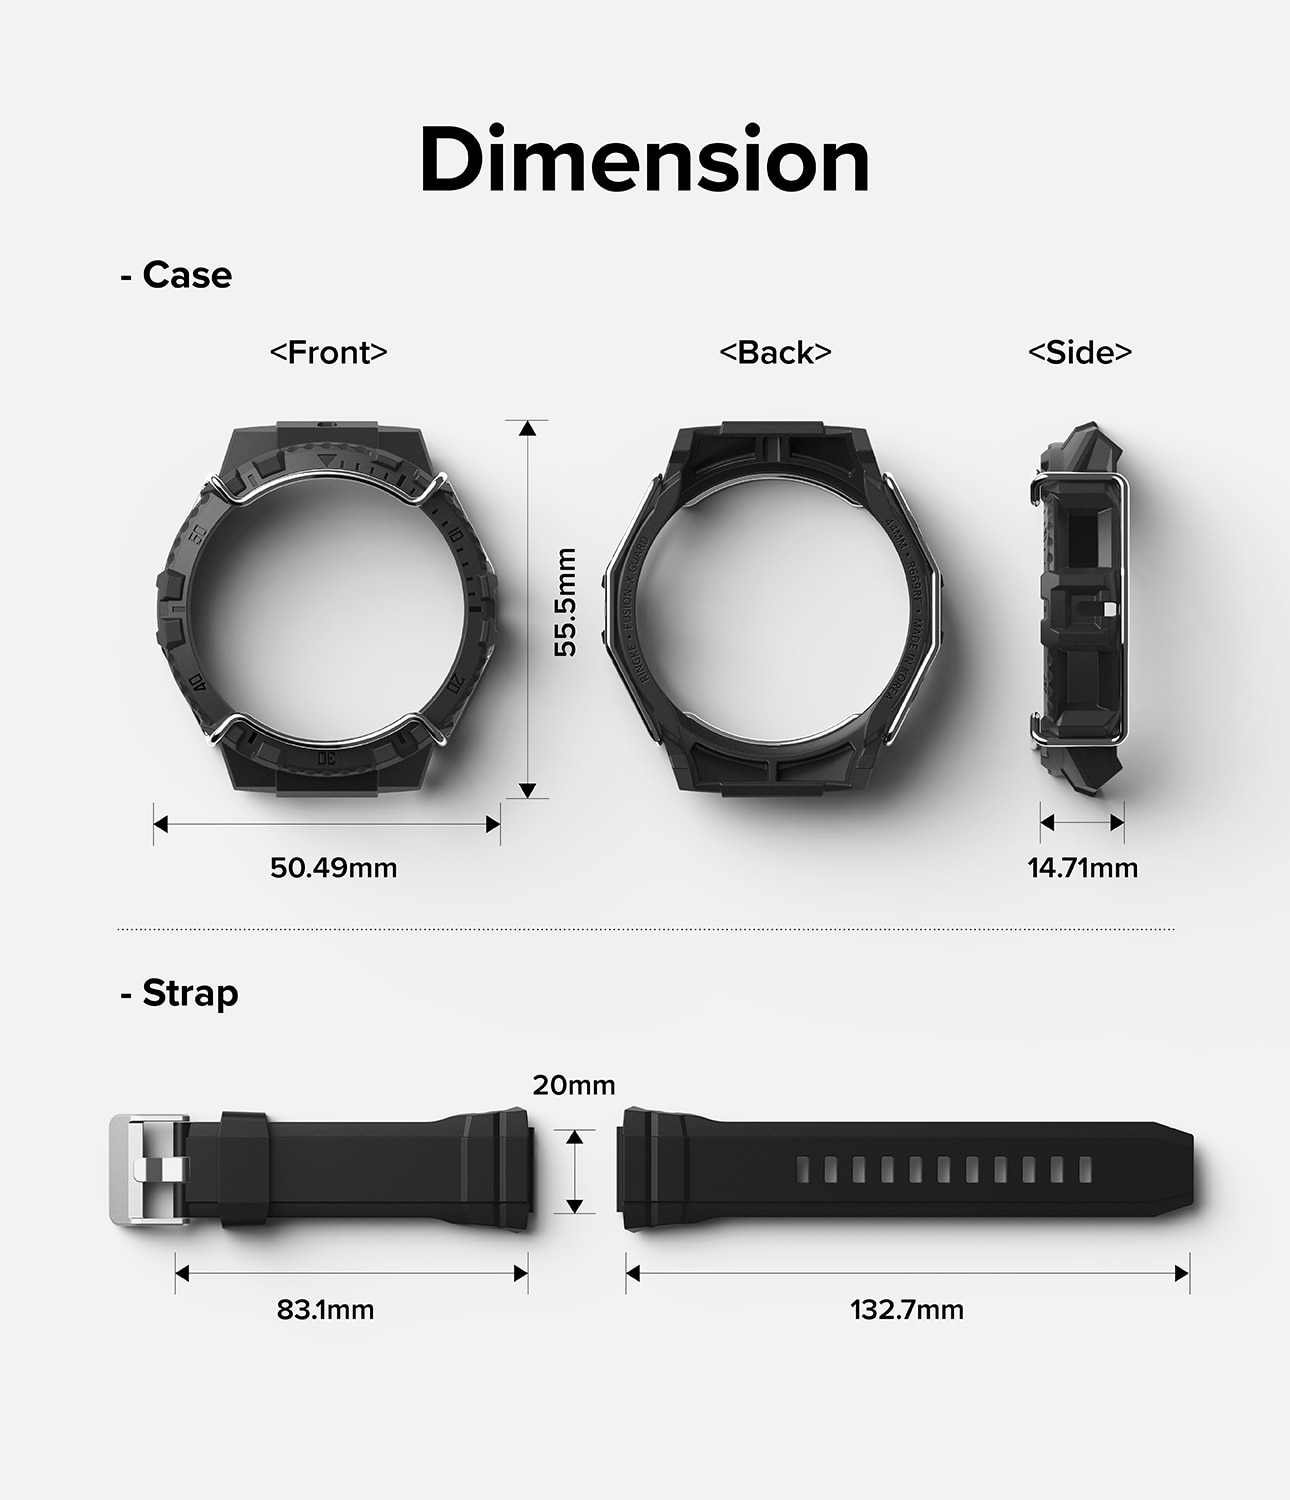 Fusion-X Guard Case+Band Samsung Galaxy Watch 4 44mm Black